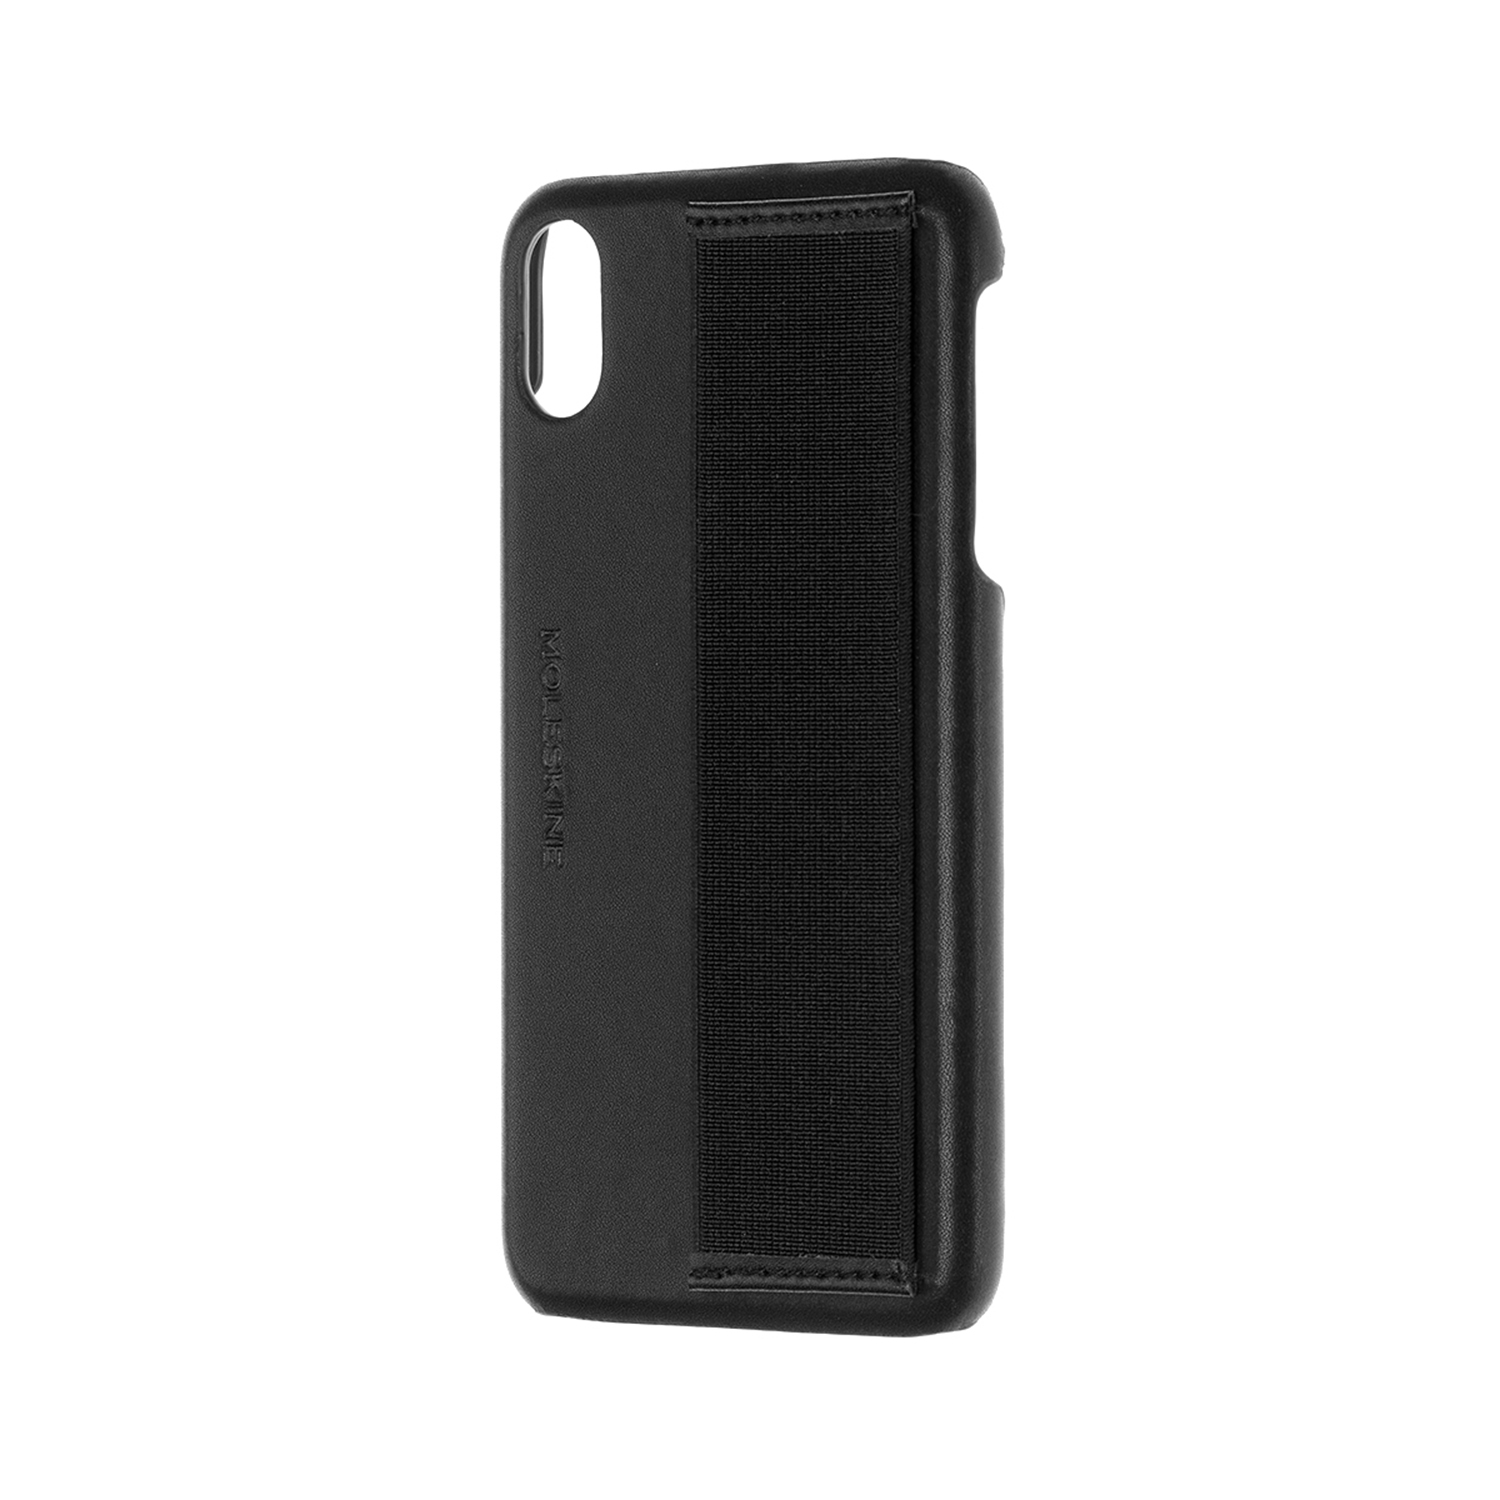  Carcasa de Iphone XS MAX - Moleskine - Black | Moleskine 